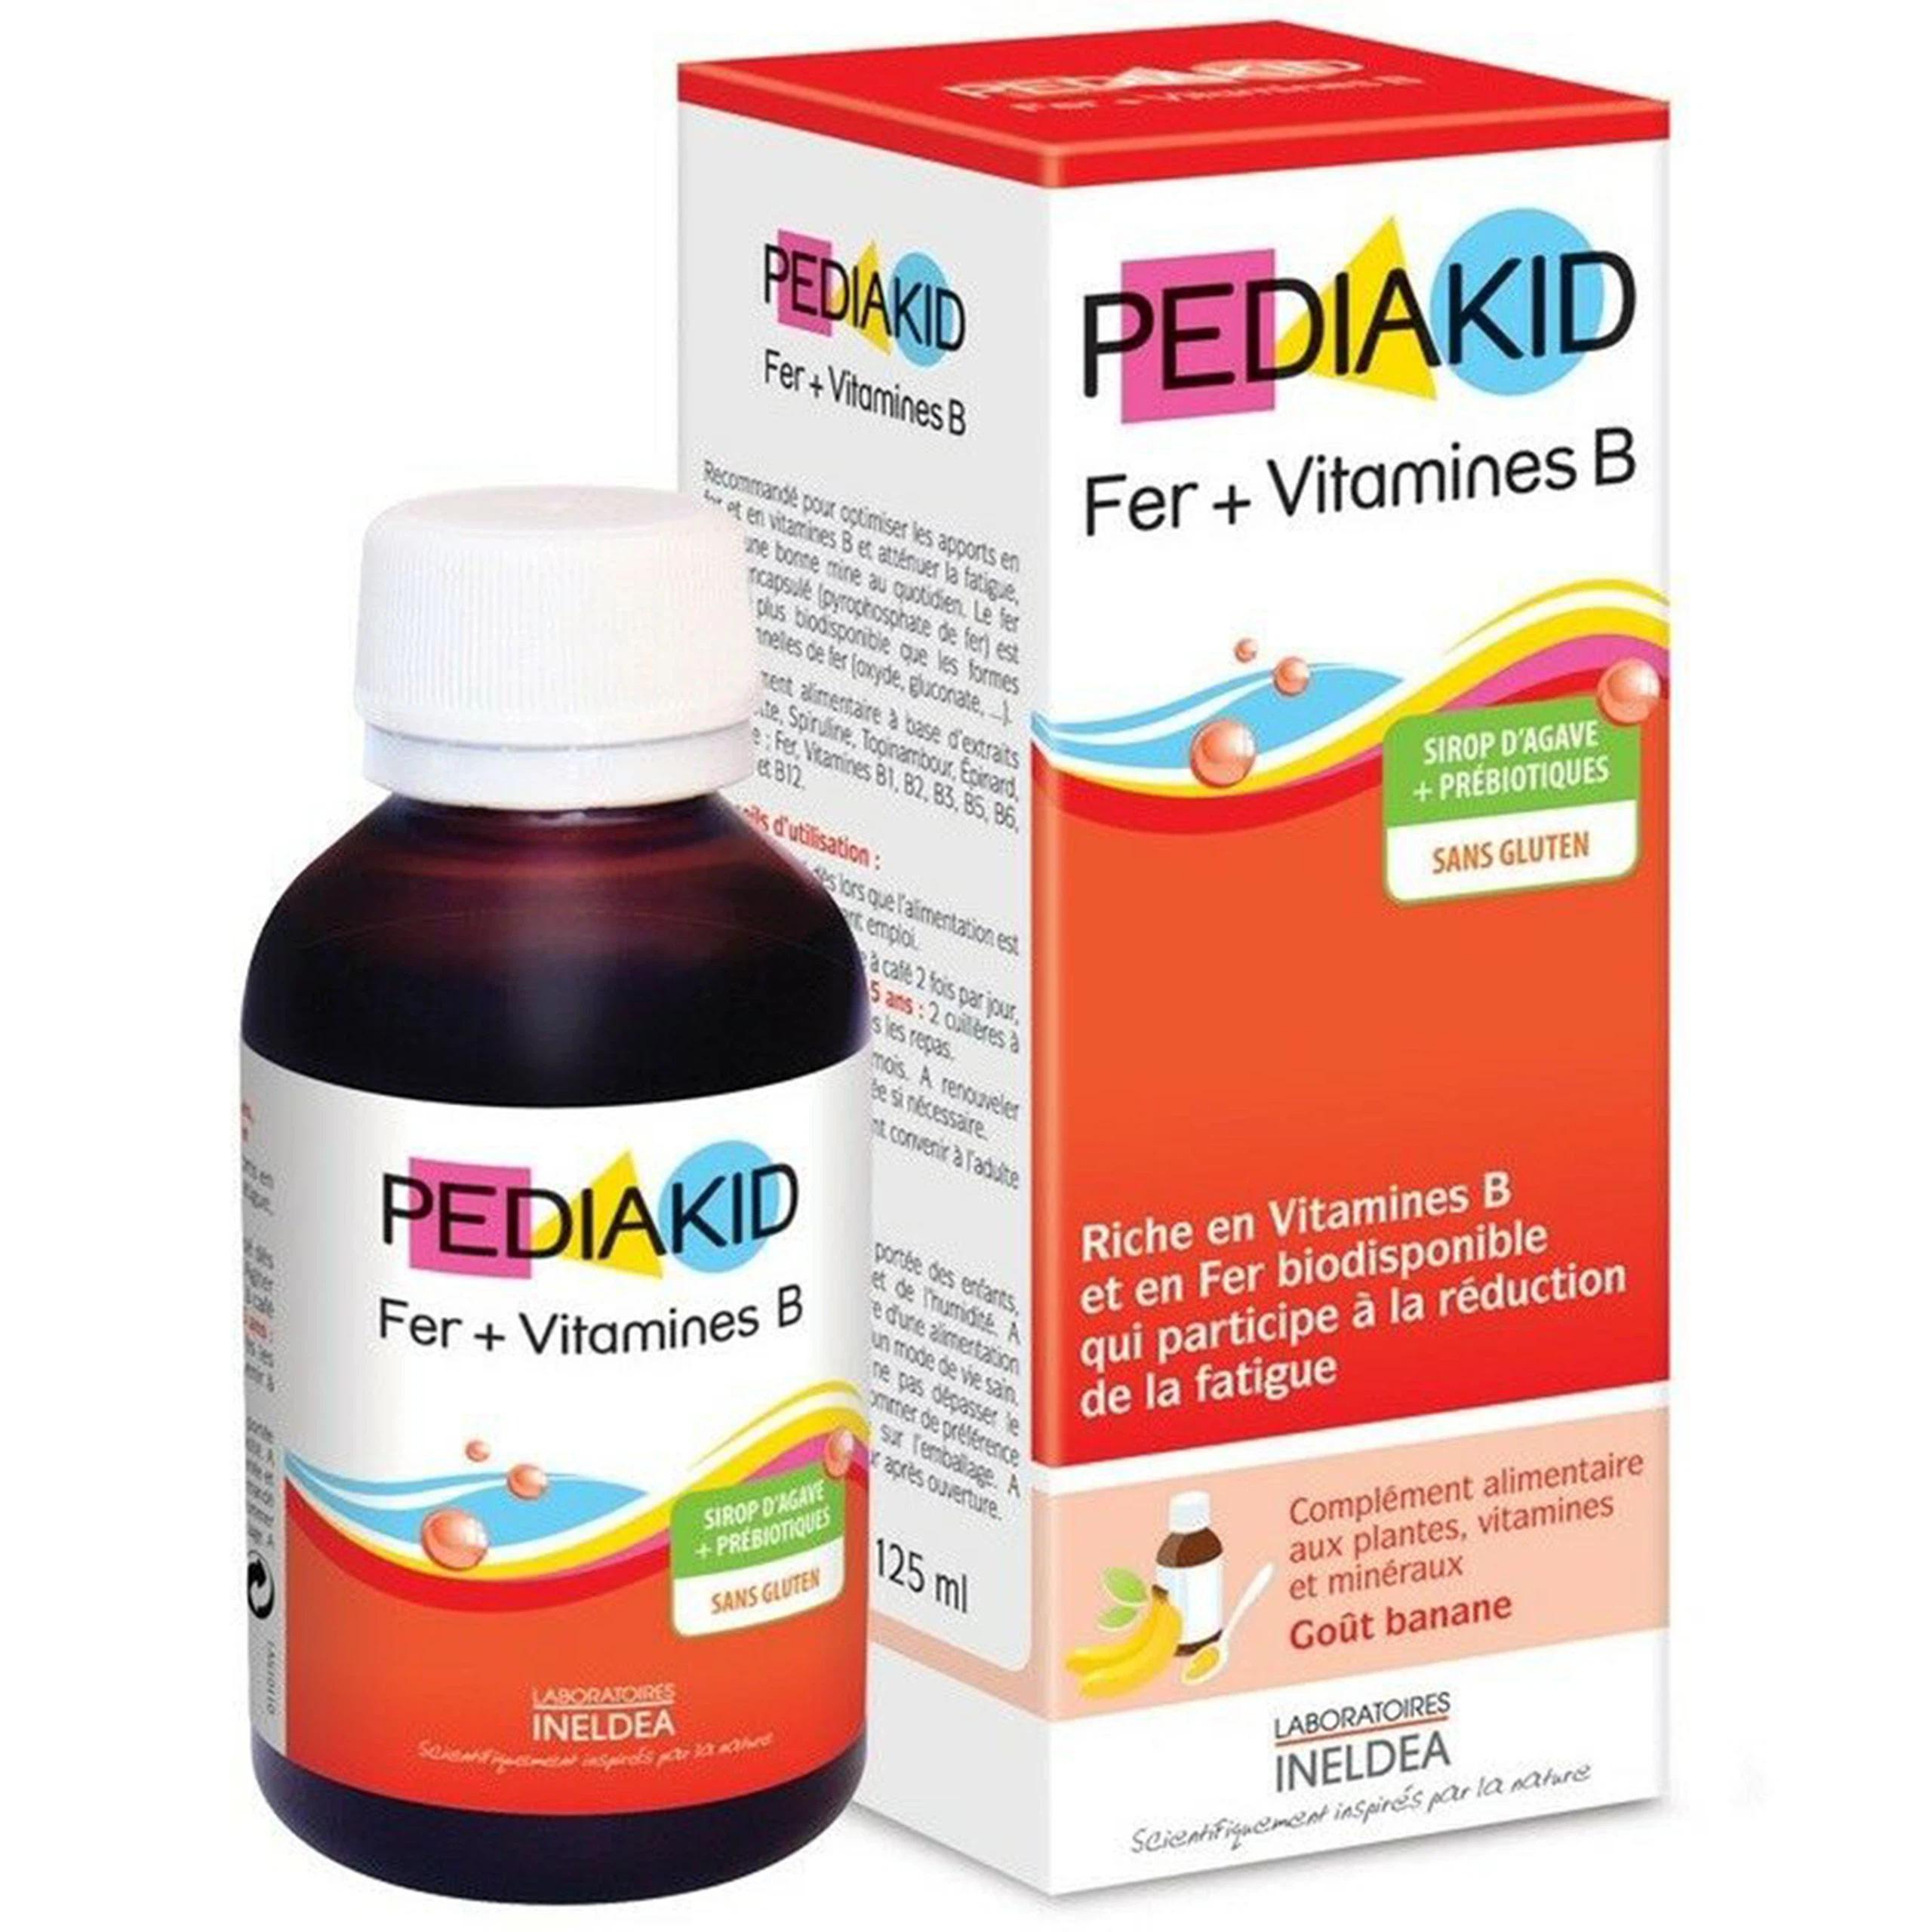 Siro Pediakid Fer + Vitamines B giúp bổ sung thảo mộc, Vitamin, khoảng chất (125ml)